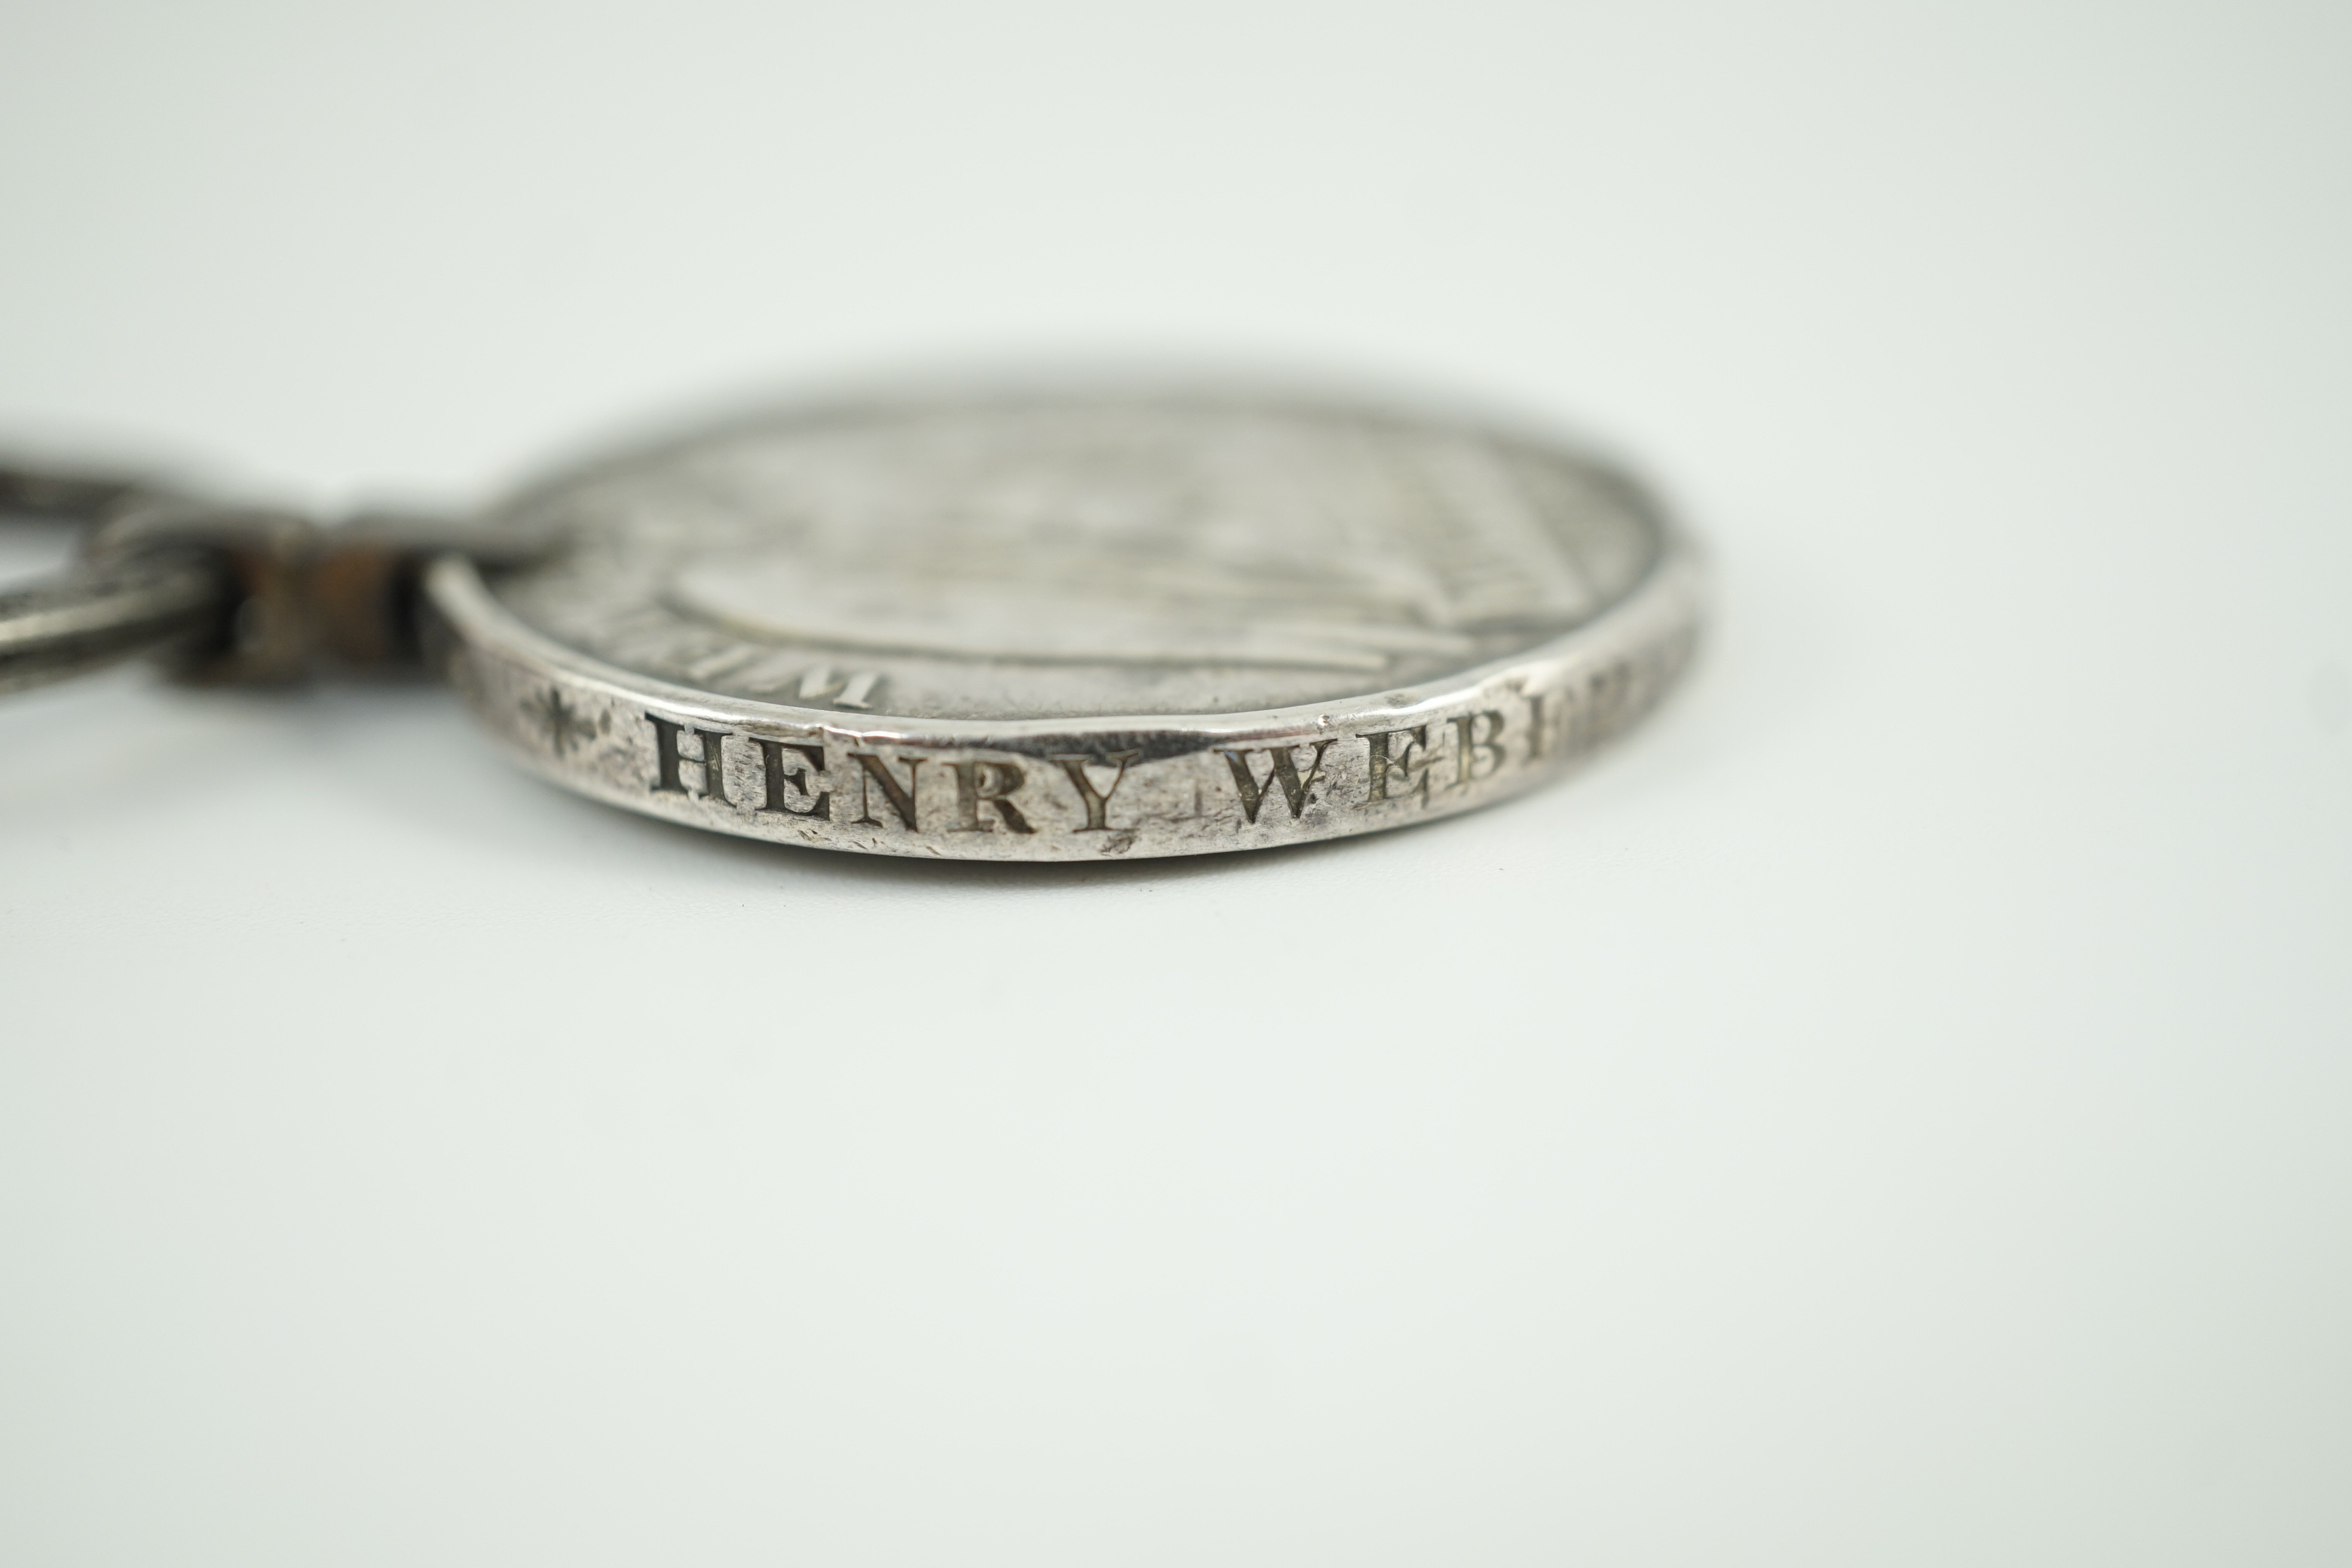 British campaign medals, Waterloo medal impressed Henry Weber 2nd Batt. 59th Reg. Foot steel - Image 6 of 9